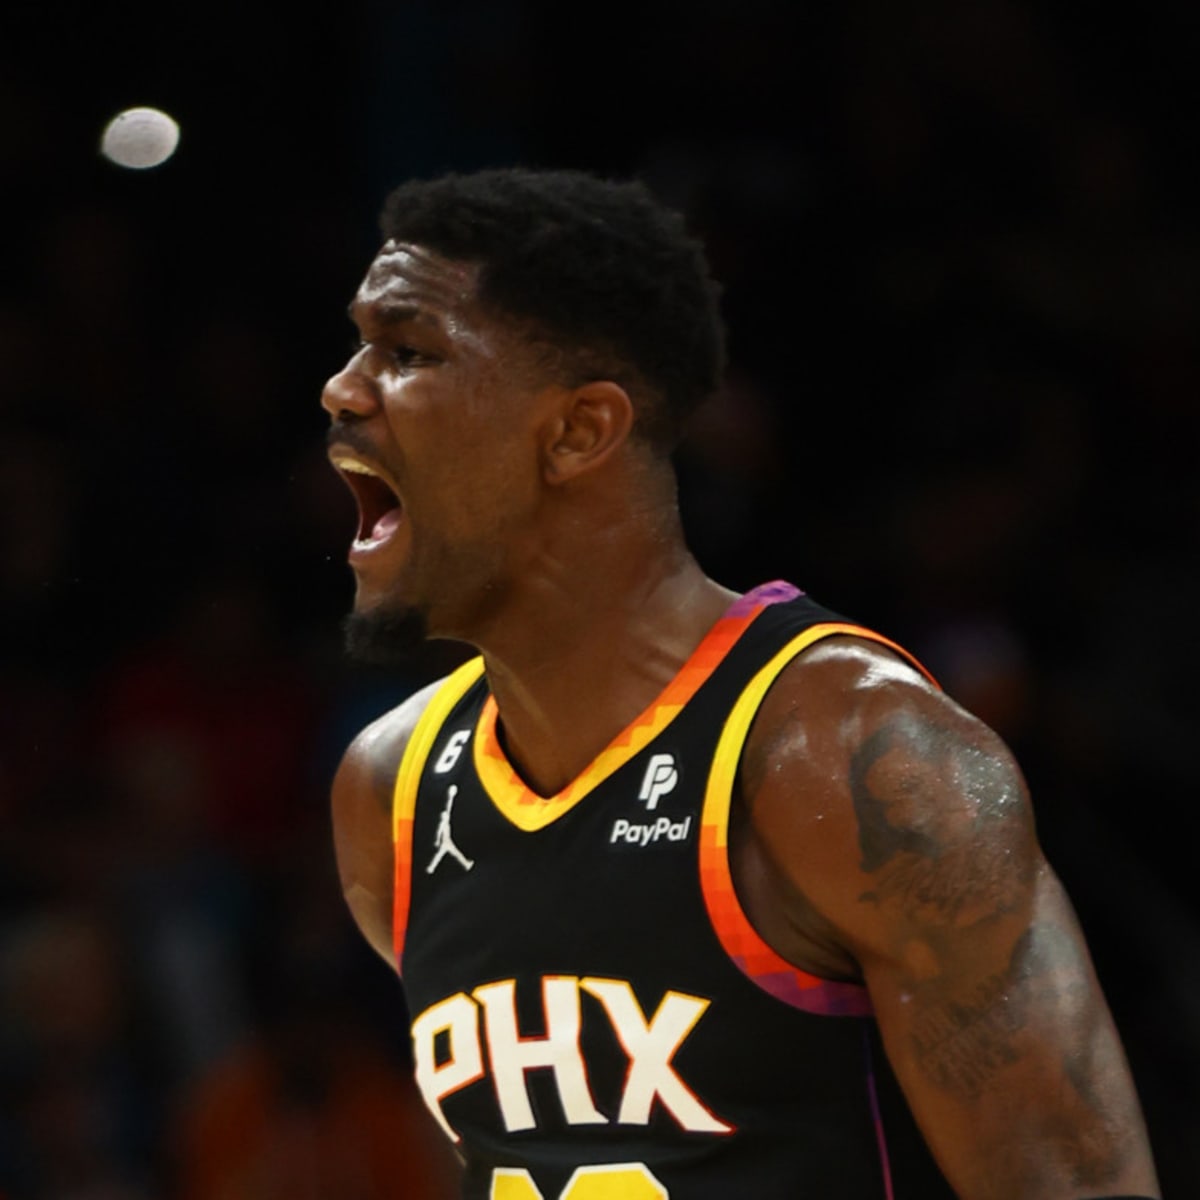 Phoenix Suns Trade Deandre Ayton in Three-Team Deal - Sports